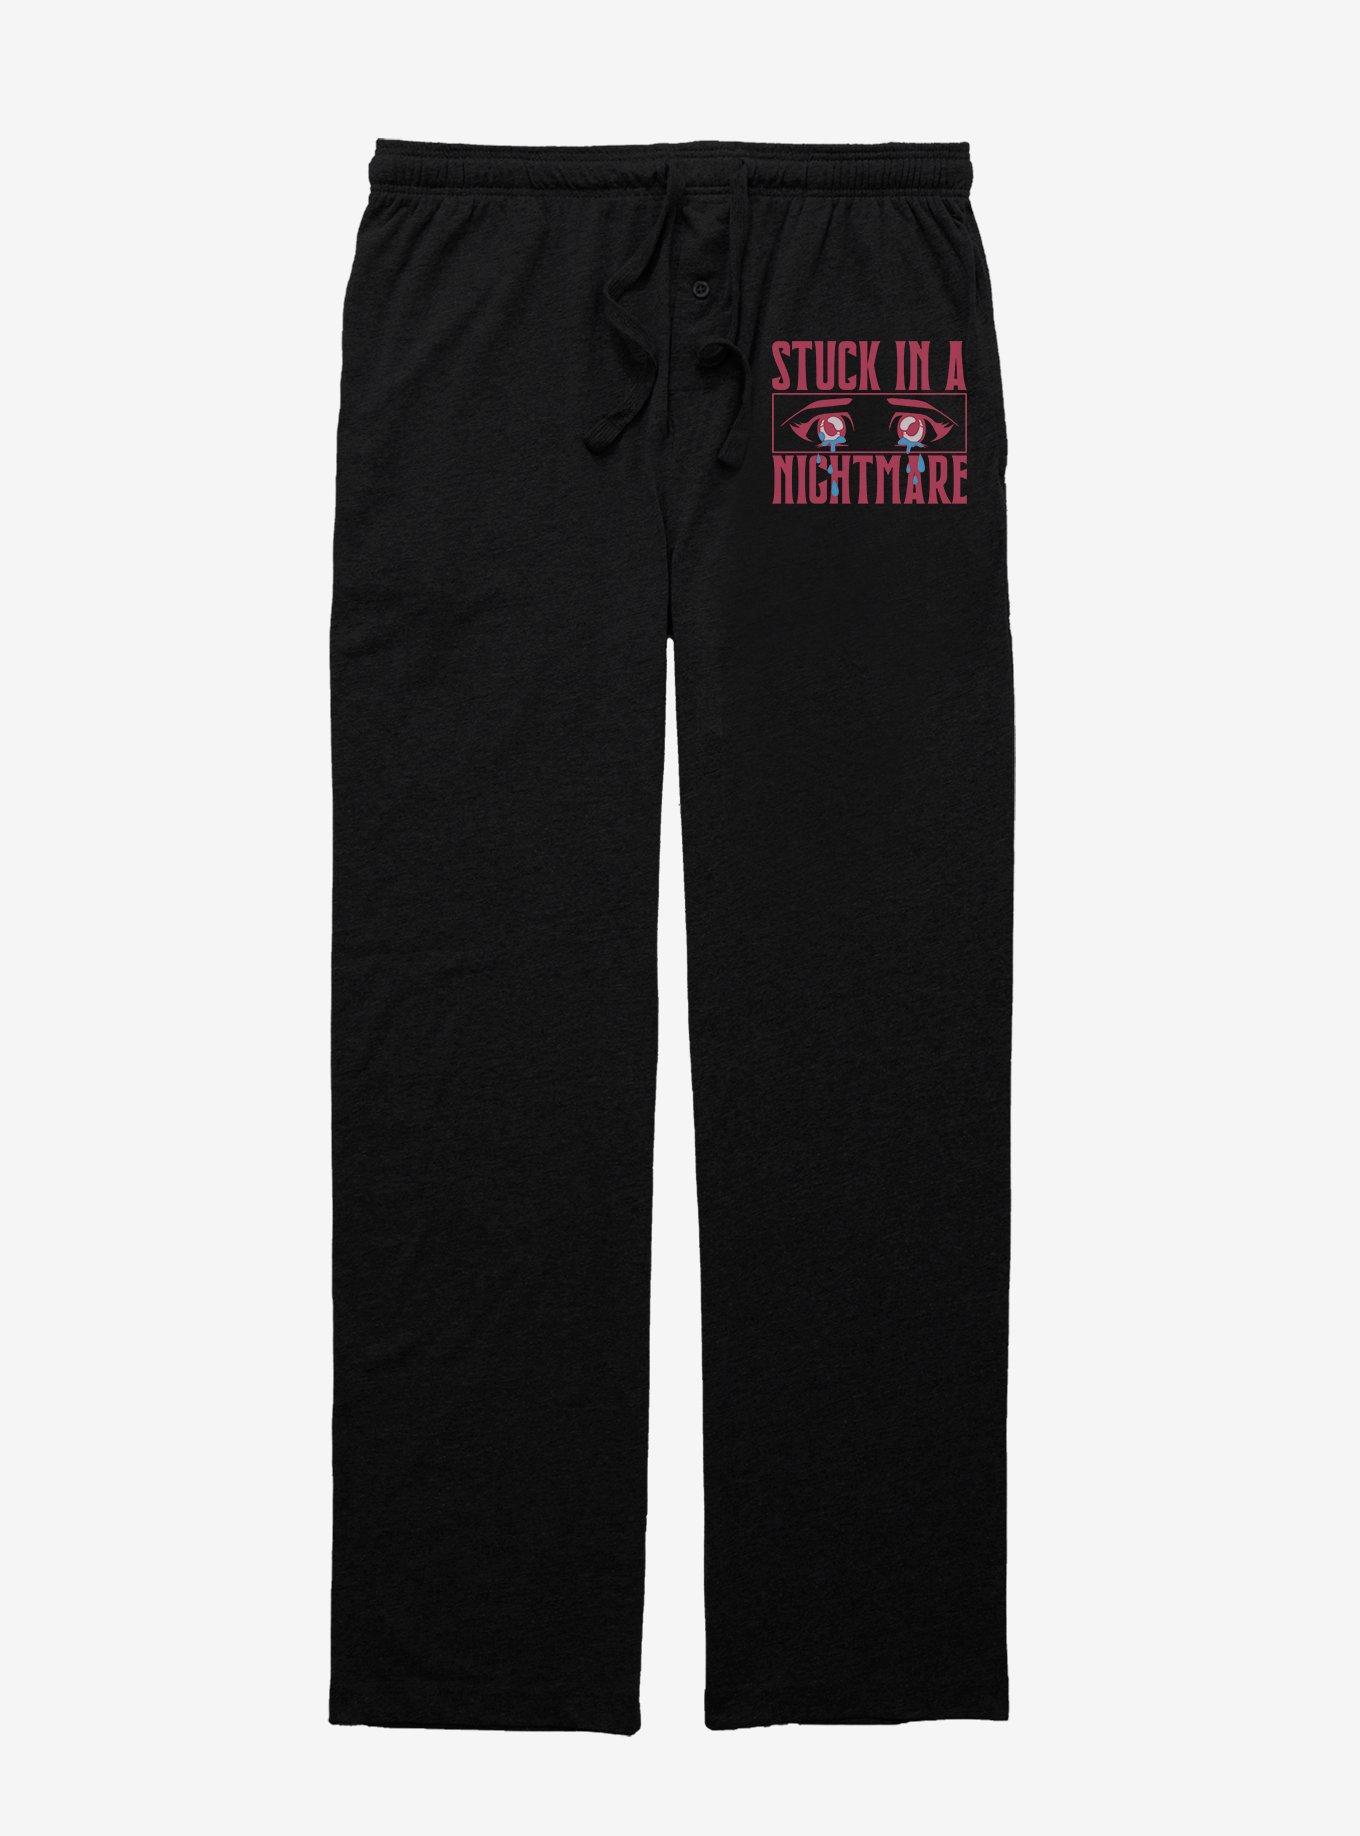 Cozy Collection Stuck In A Nightmare Pajama Pants, BLACK, hi-res